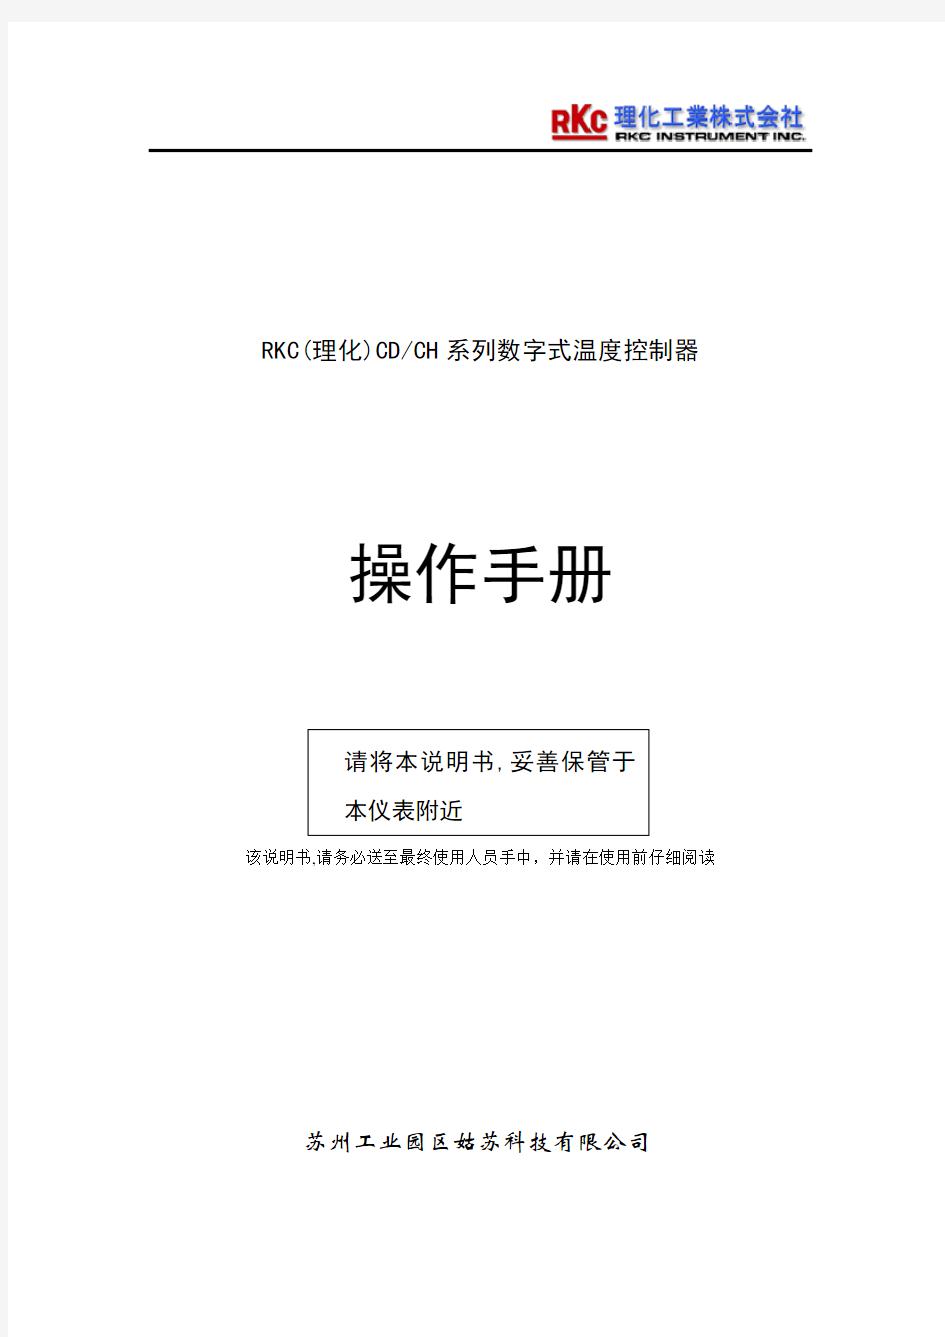 RKC CD901中文说明书